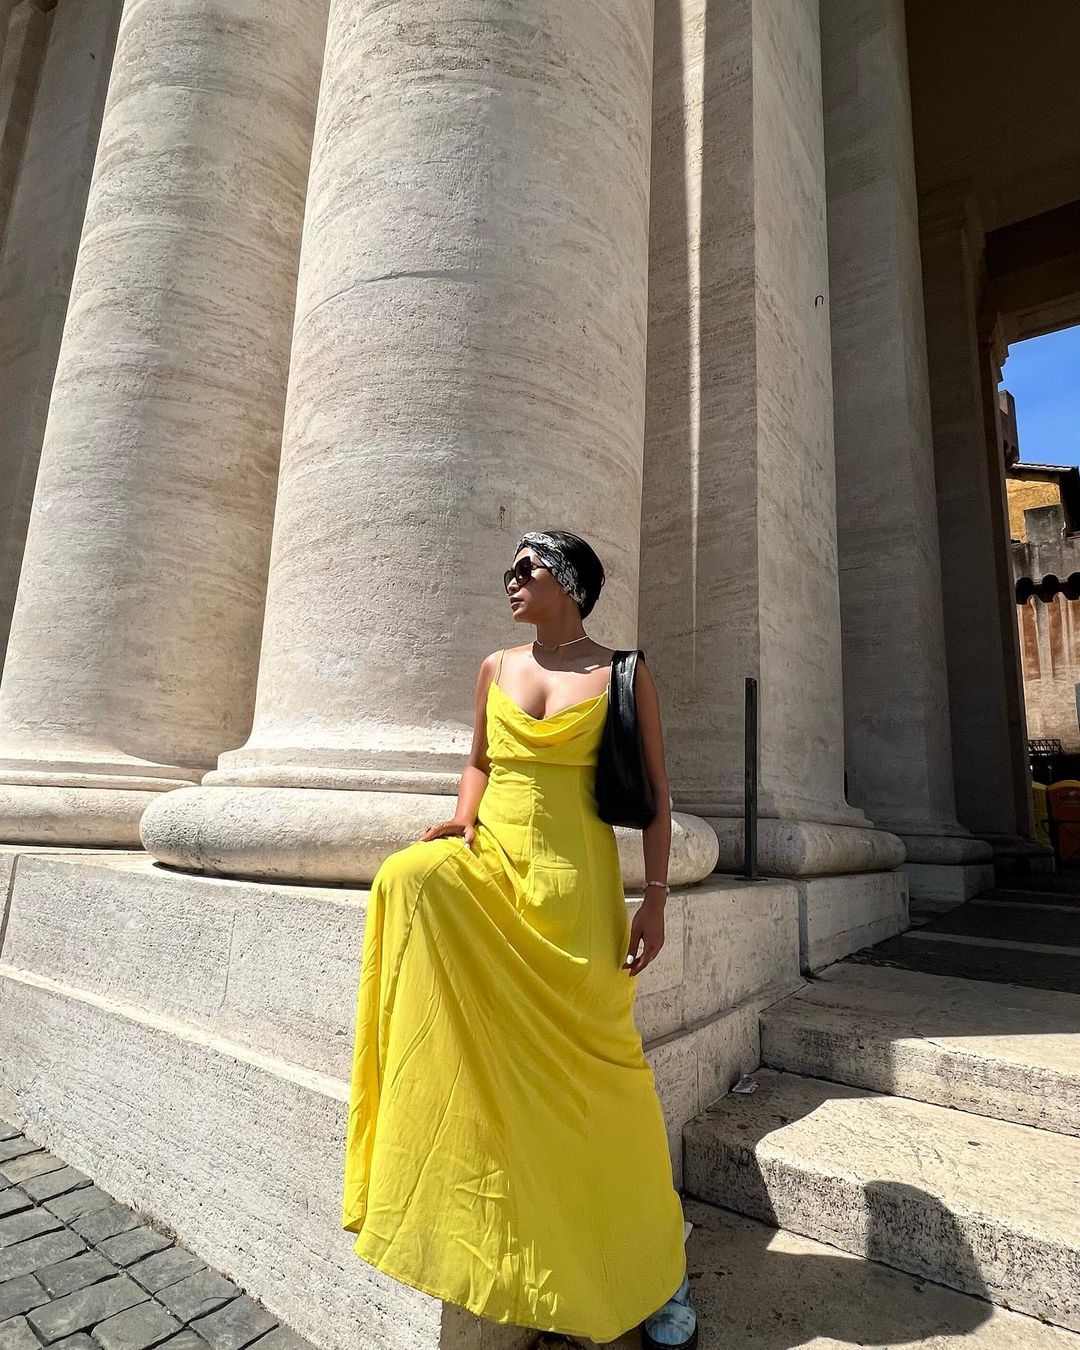 Sayani Gupta looks sassy in the plain yellow cotton dress